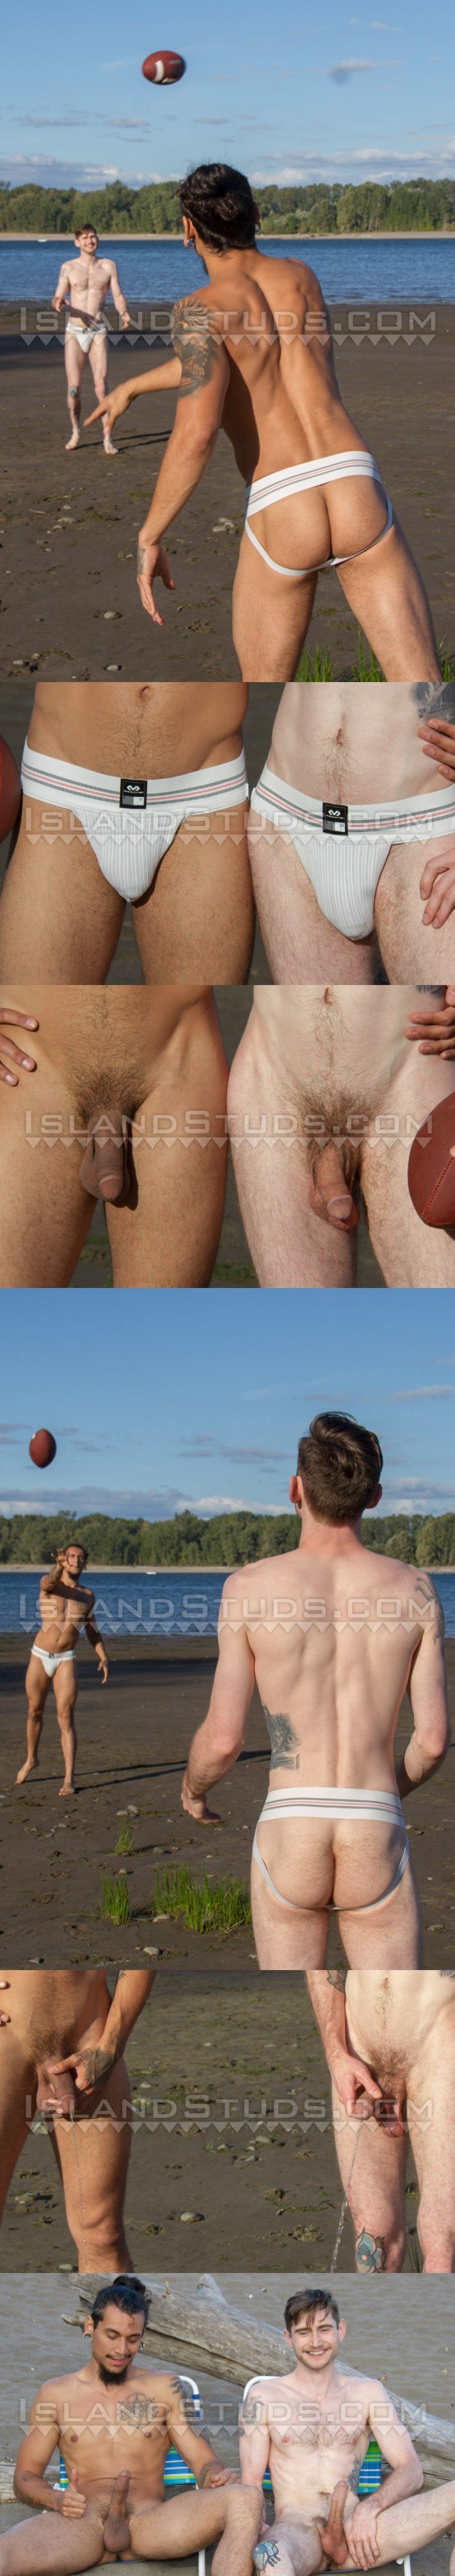 Jerkin' Best Bros in Island Studs Football Nude #16